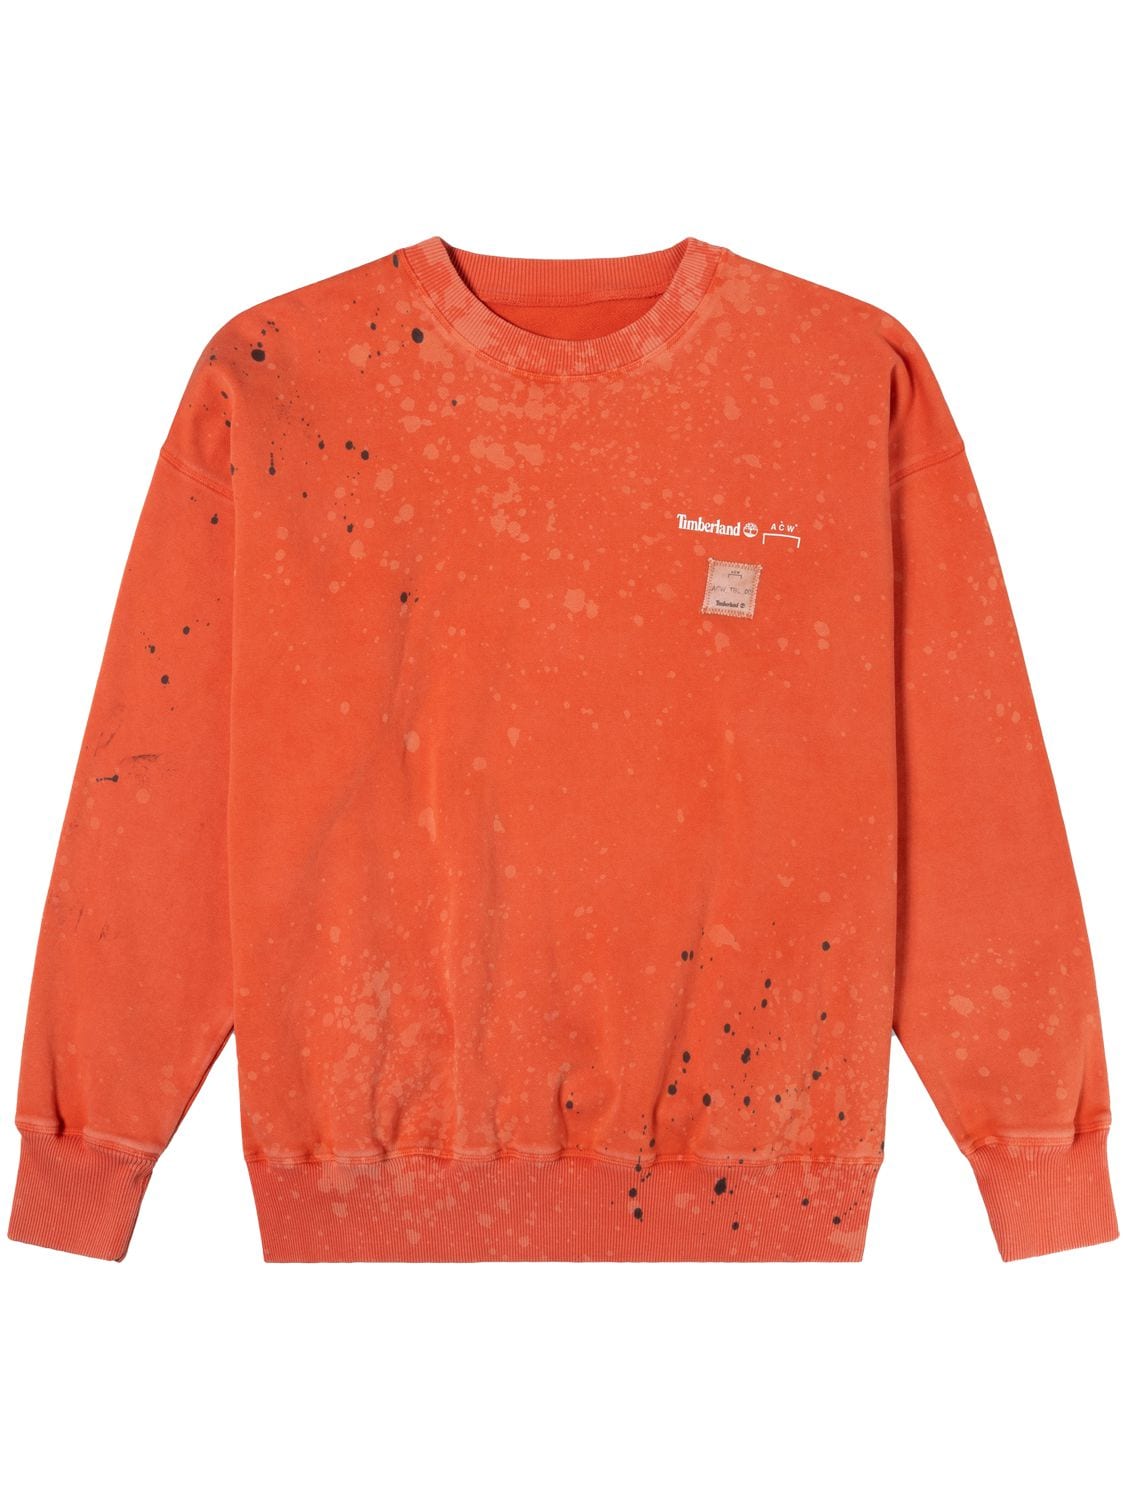 A-cold-wall* X Timberland Sweatshirt In Orange